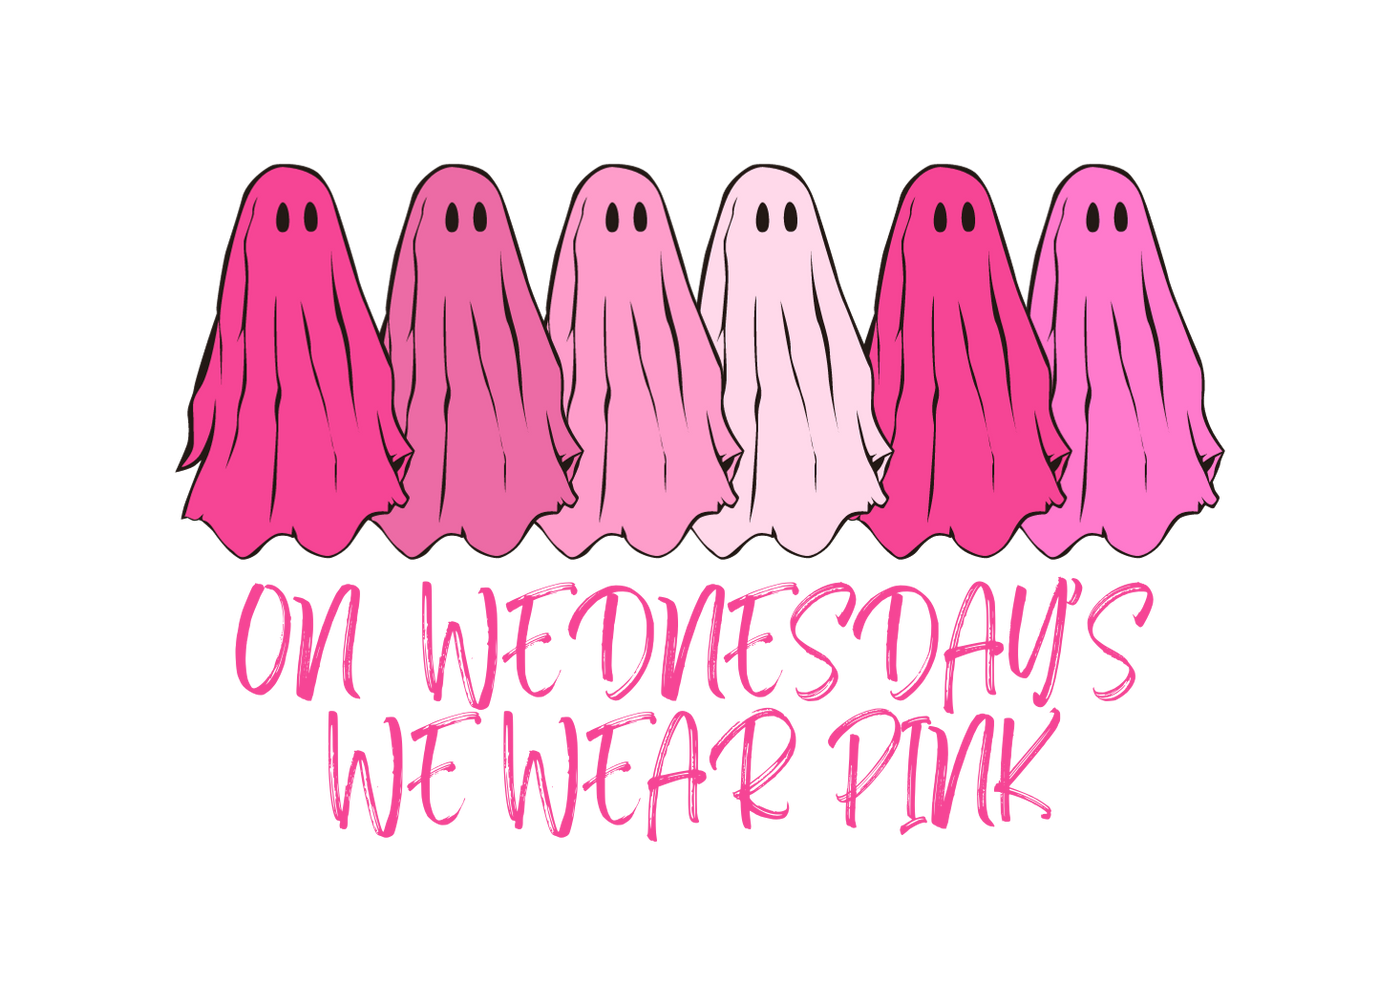 On Wednesday's We Wear Pink Crew